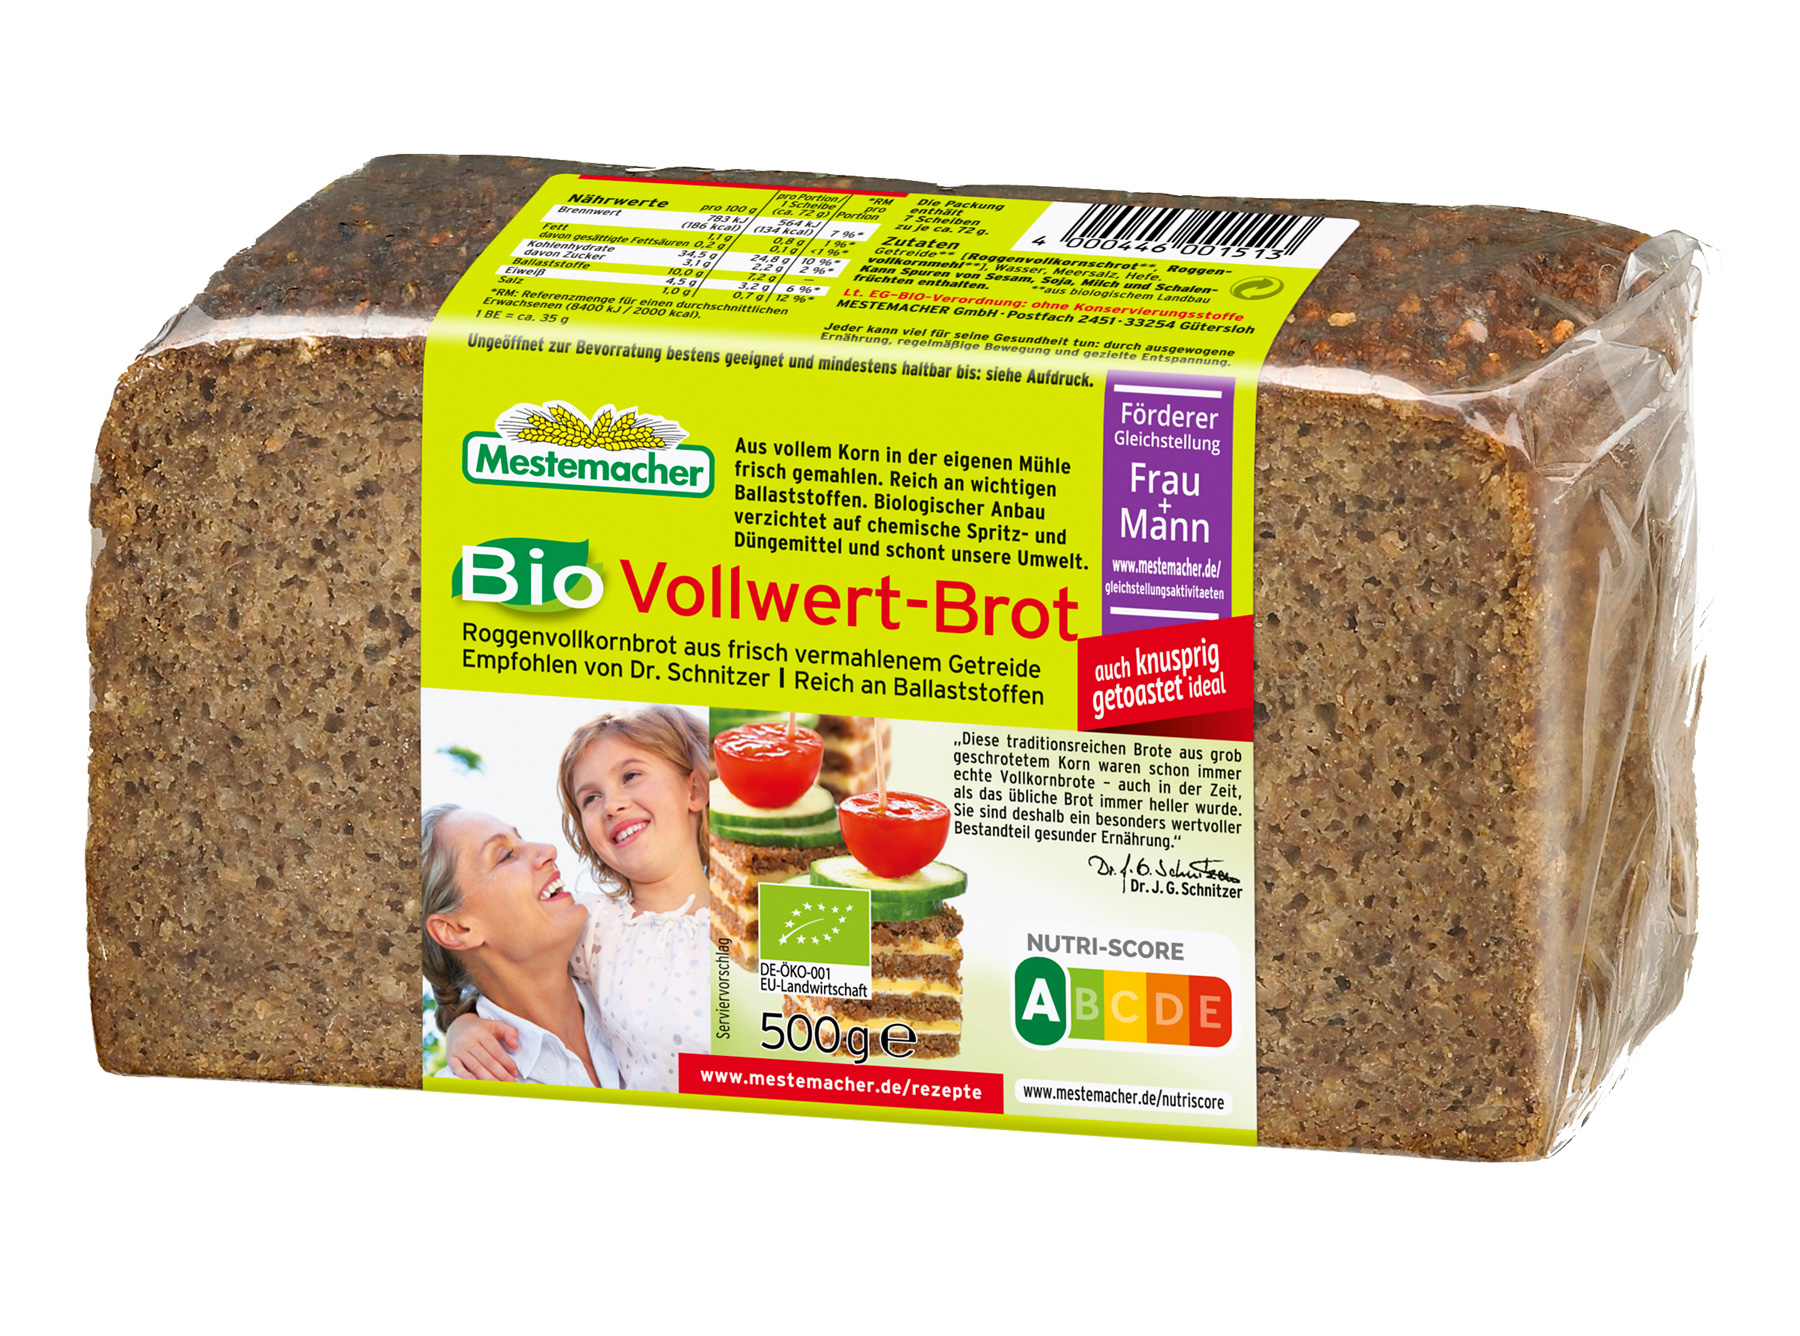 Bio Vollwert-Brot – Mestemacher.de